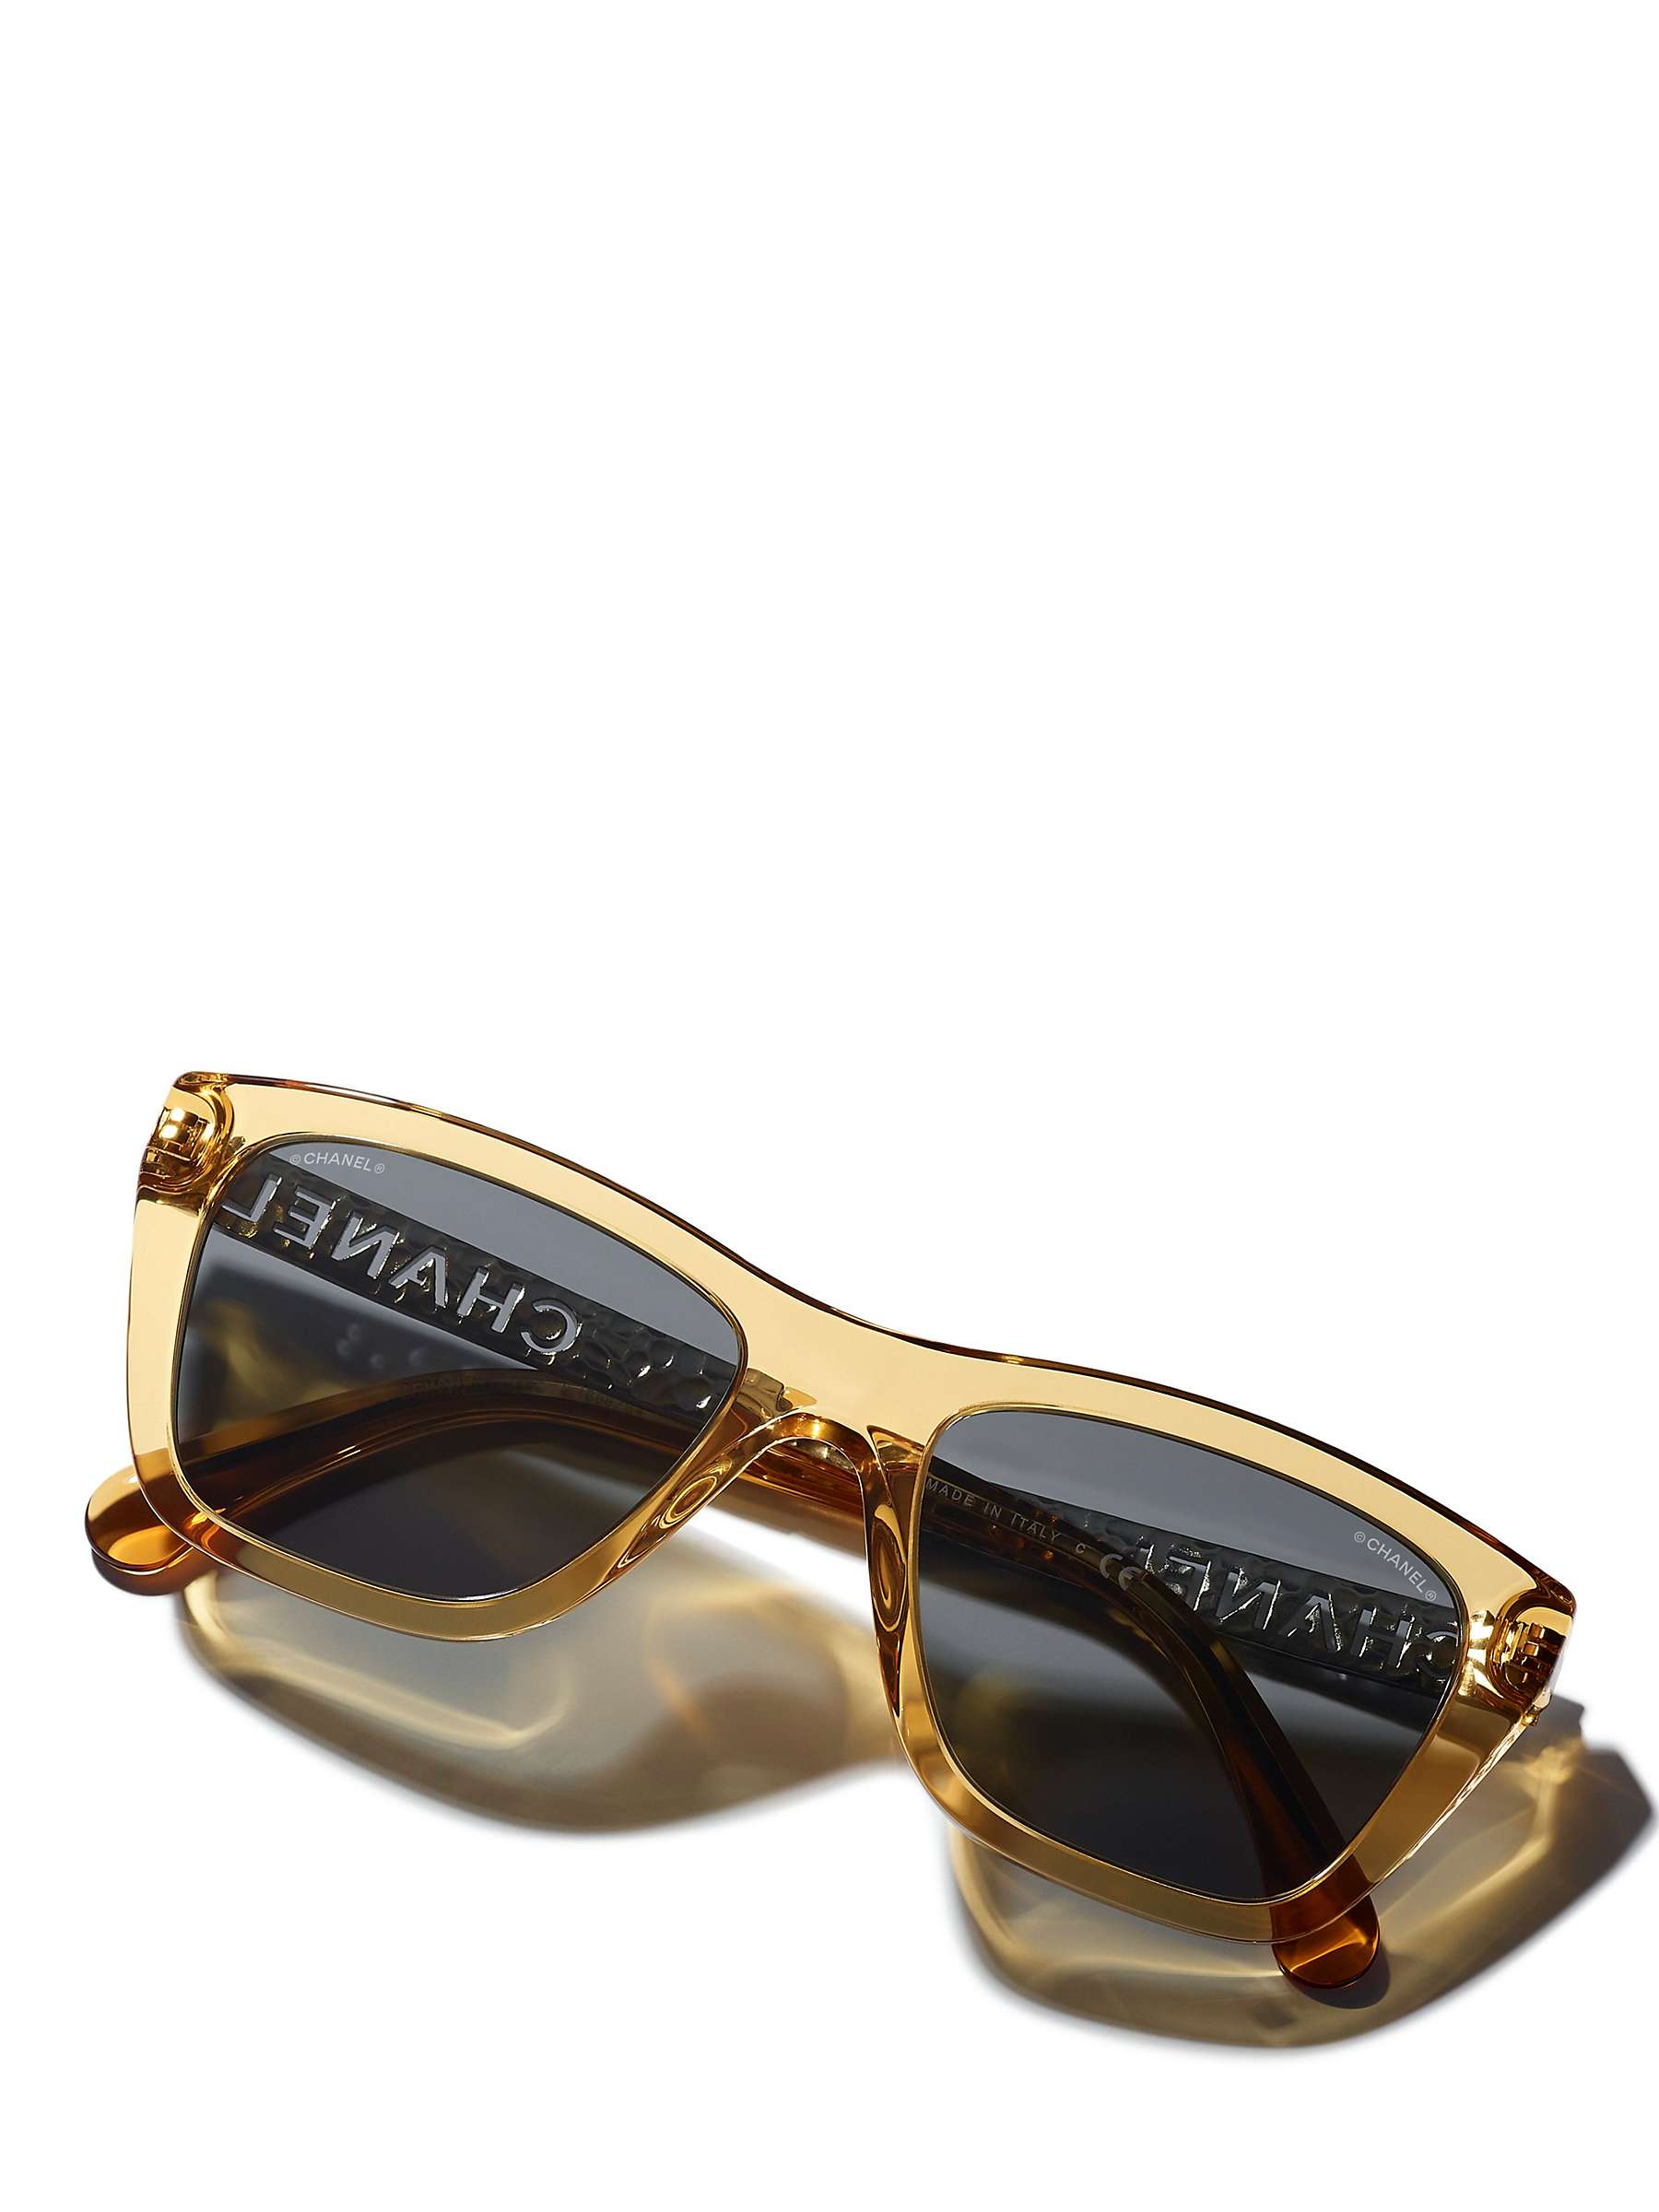 Buy CHANEL Rectangular Sunglasses CH5442 Pink/Brown Gradient Online at johnlewis.com